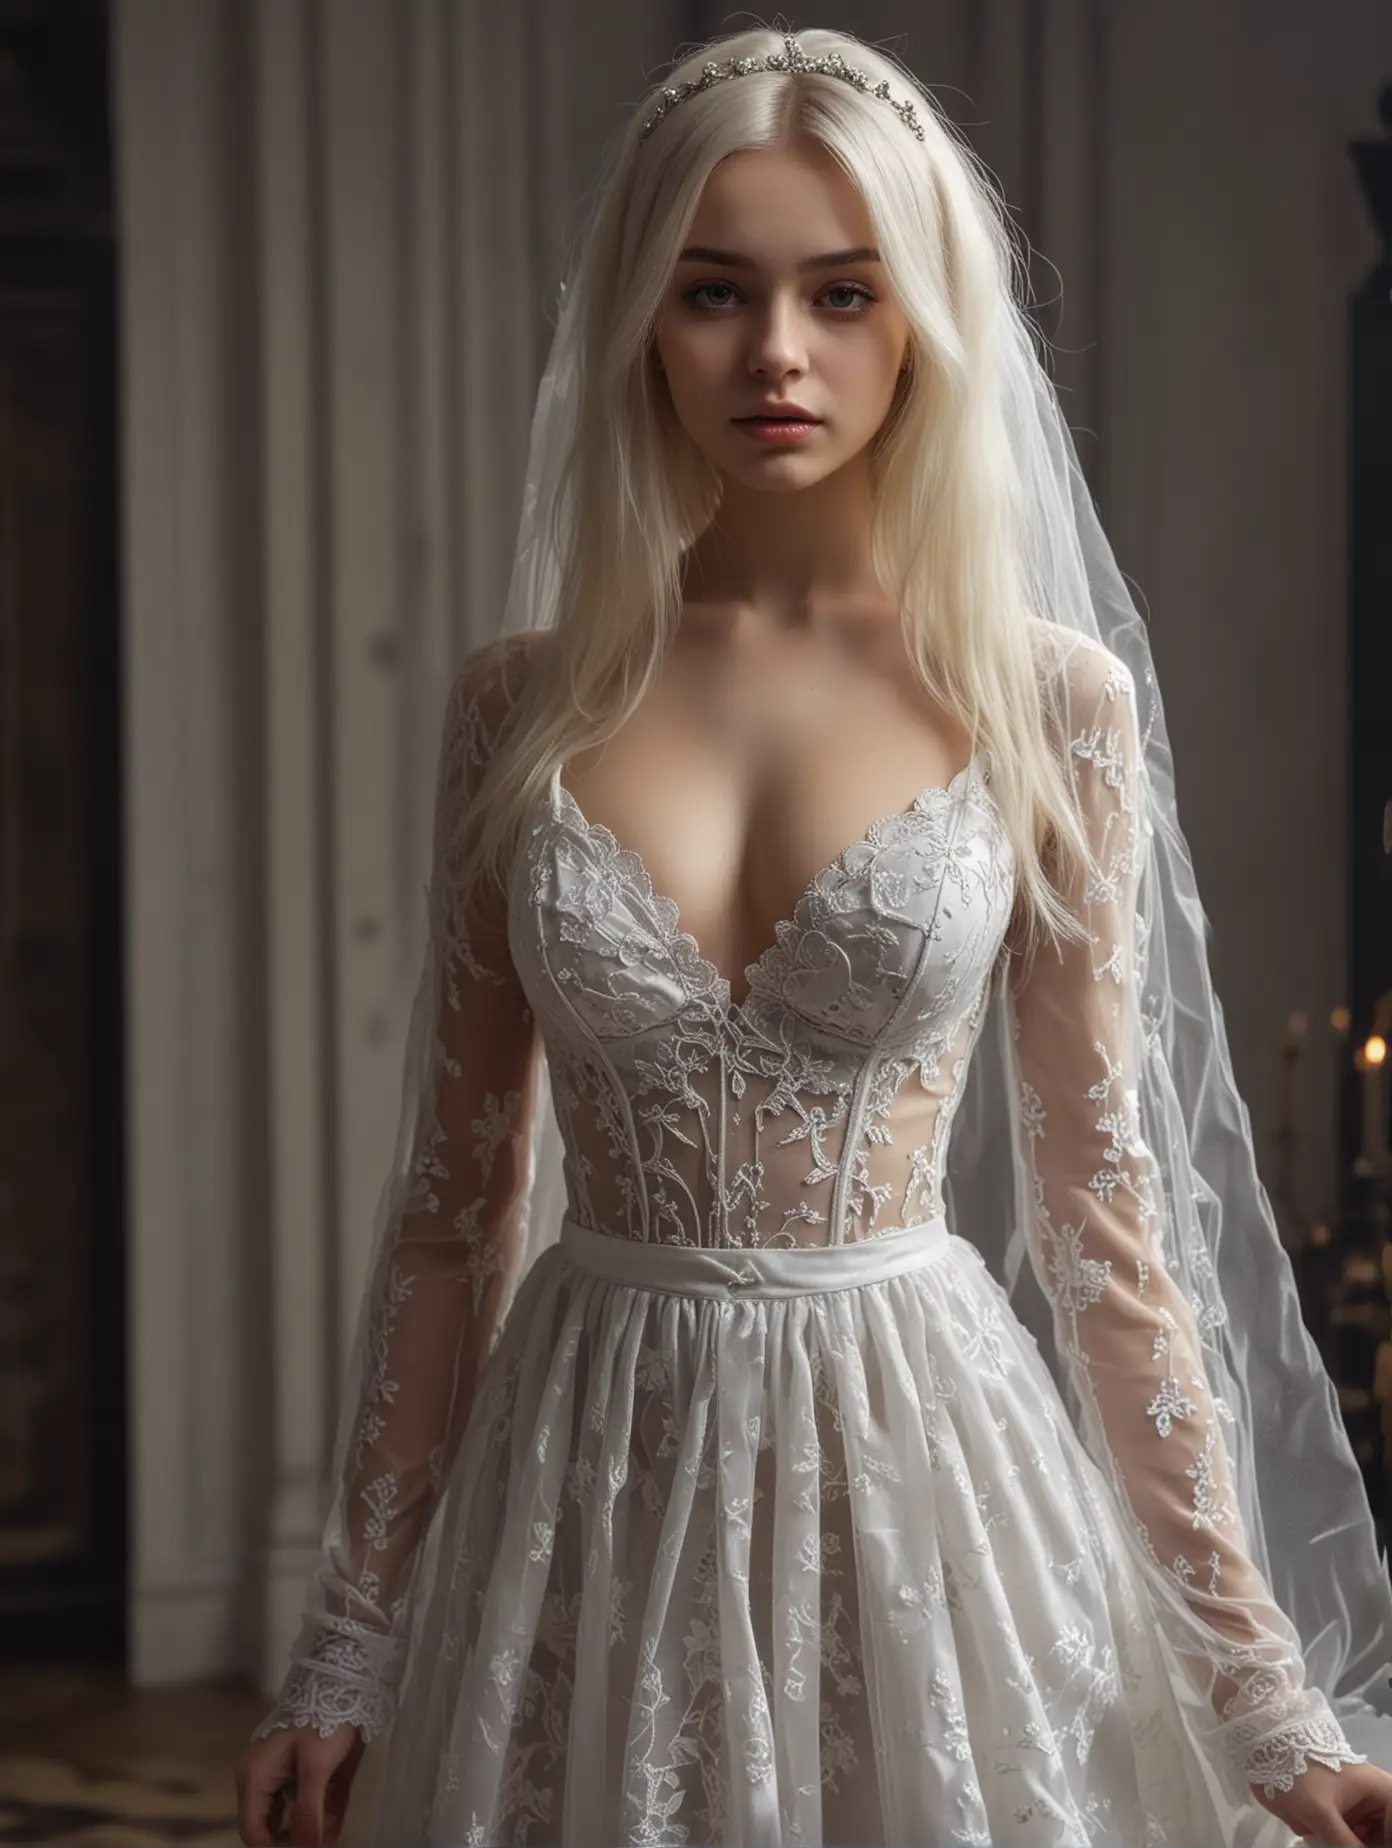 Stunning-18YearOld-Russian-Model-in-Gothic-Sheer-Wedding-Dress